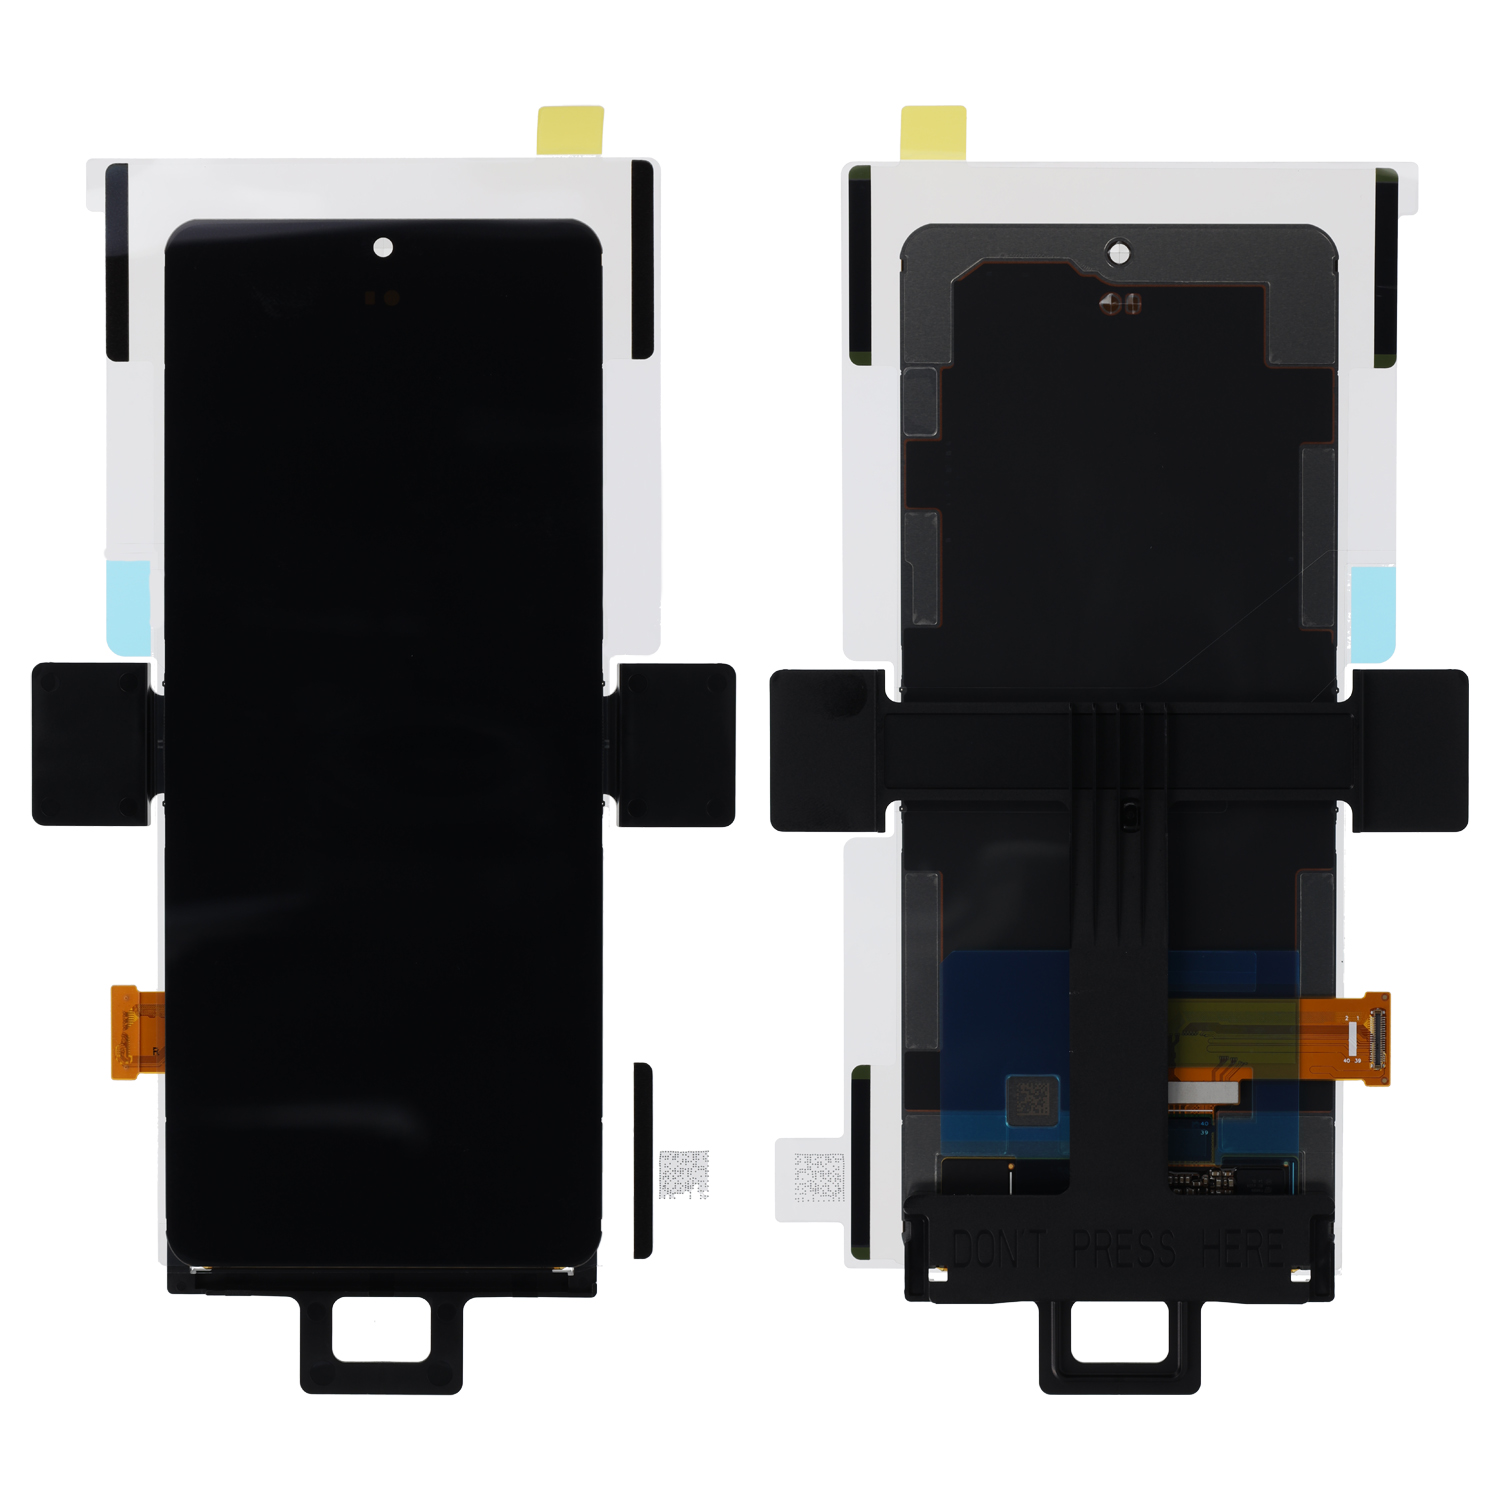 Samsung Galaxy Z Flip (F700) LCD Display (ohne Rahmen)